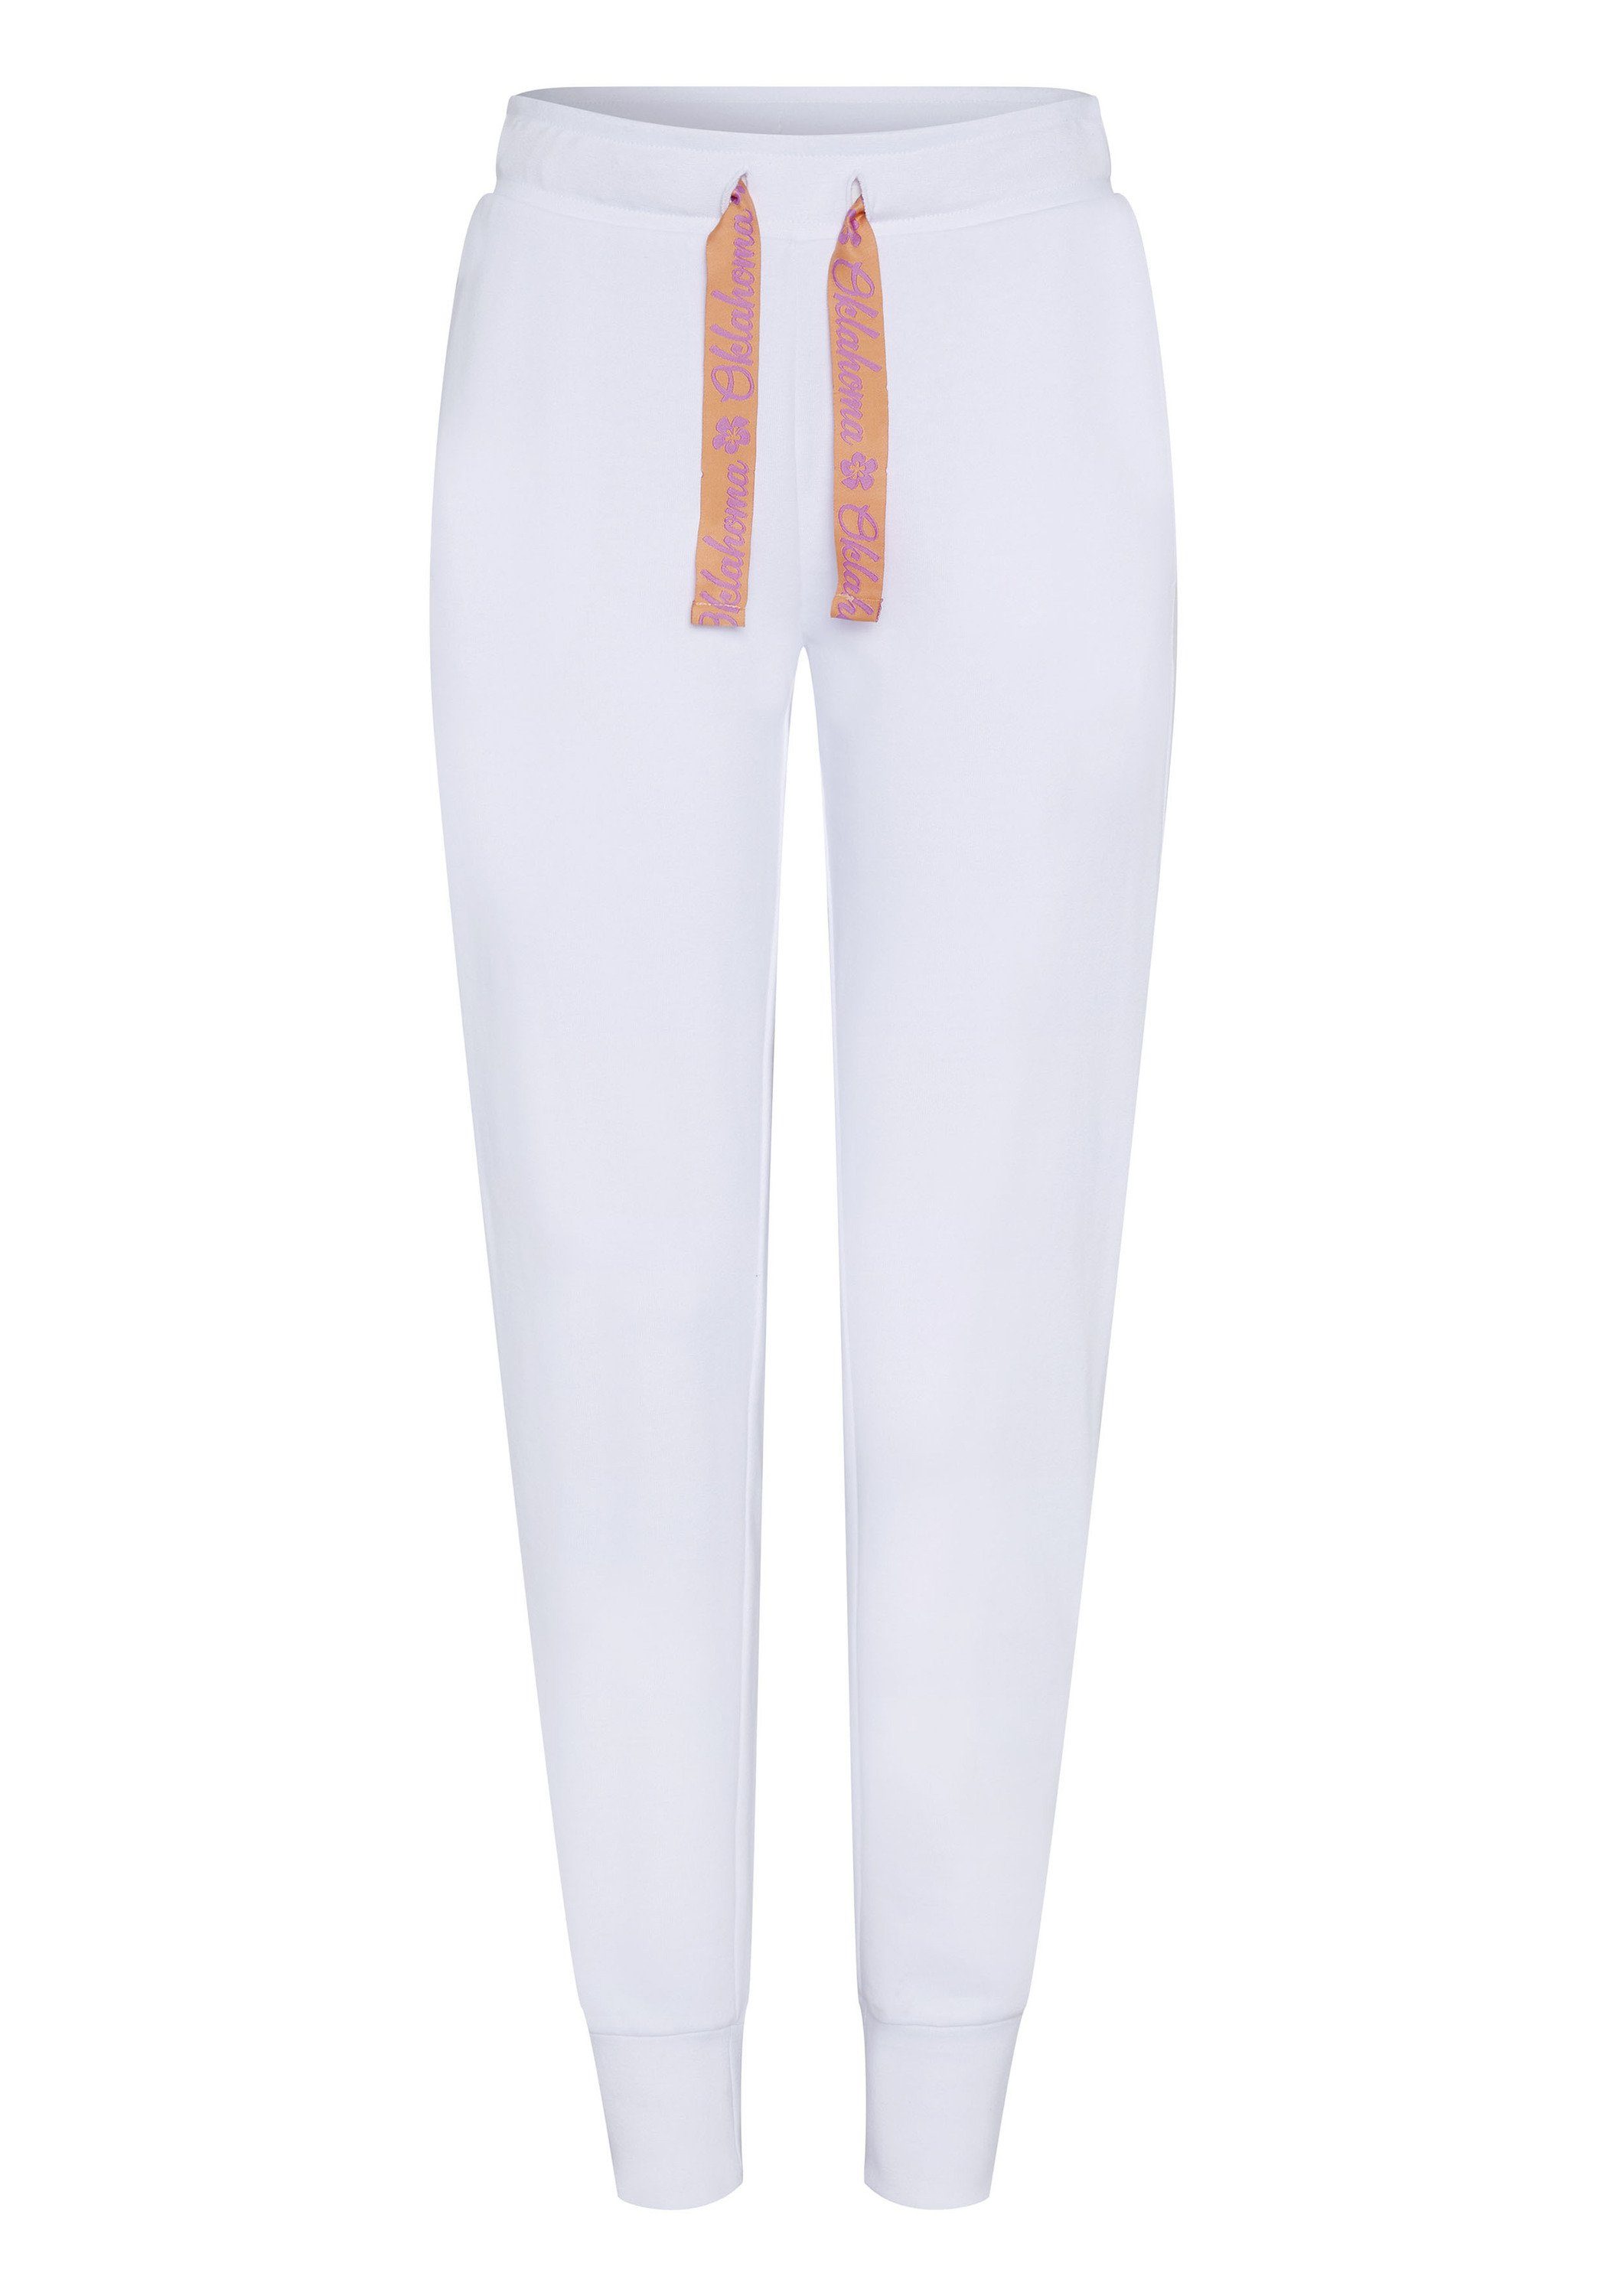 Oklahoma Jeans Sweathose in Slim Fit 11-0601 Bright White | Jogginghosen